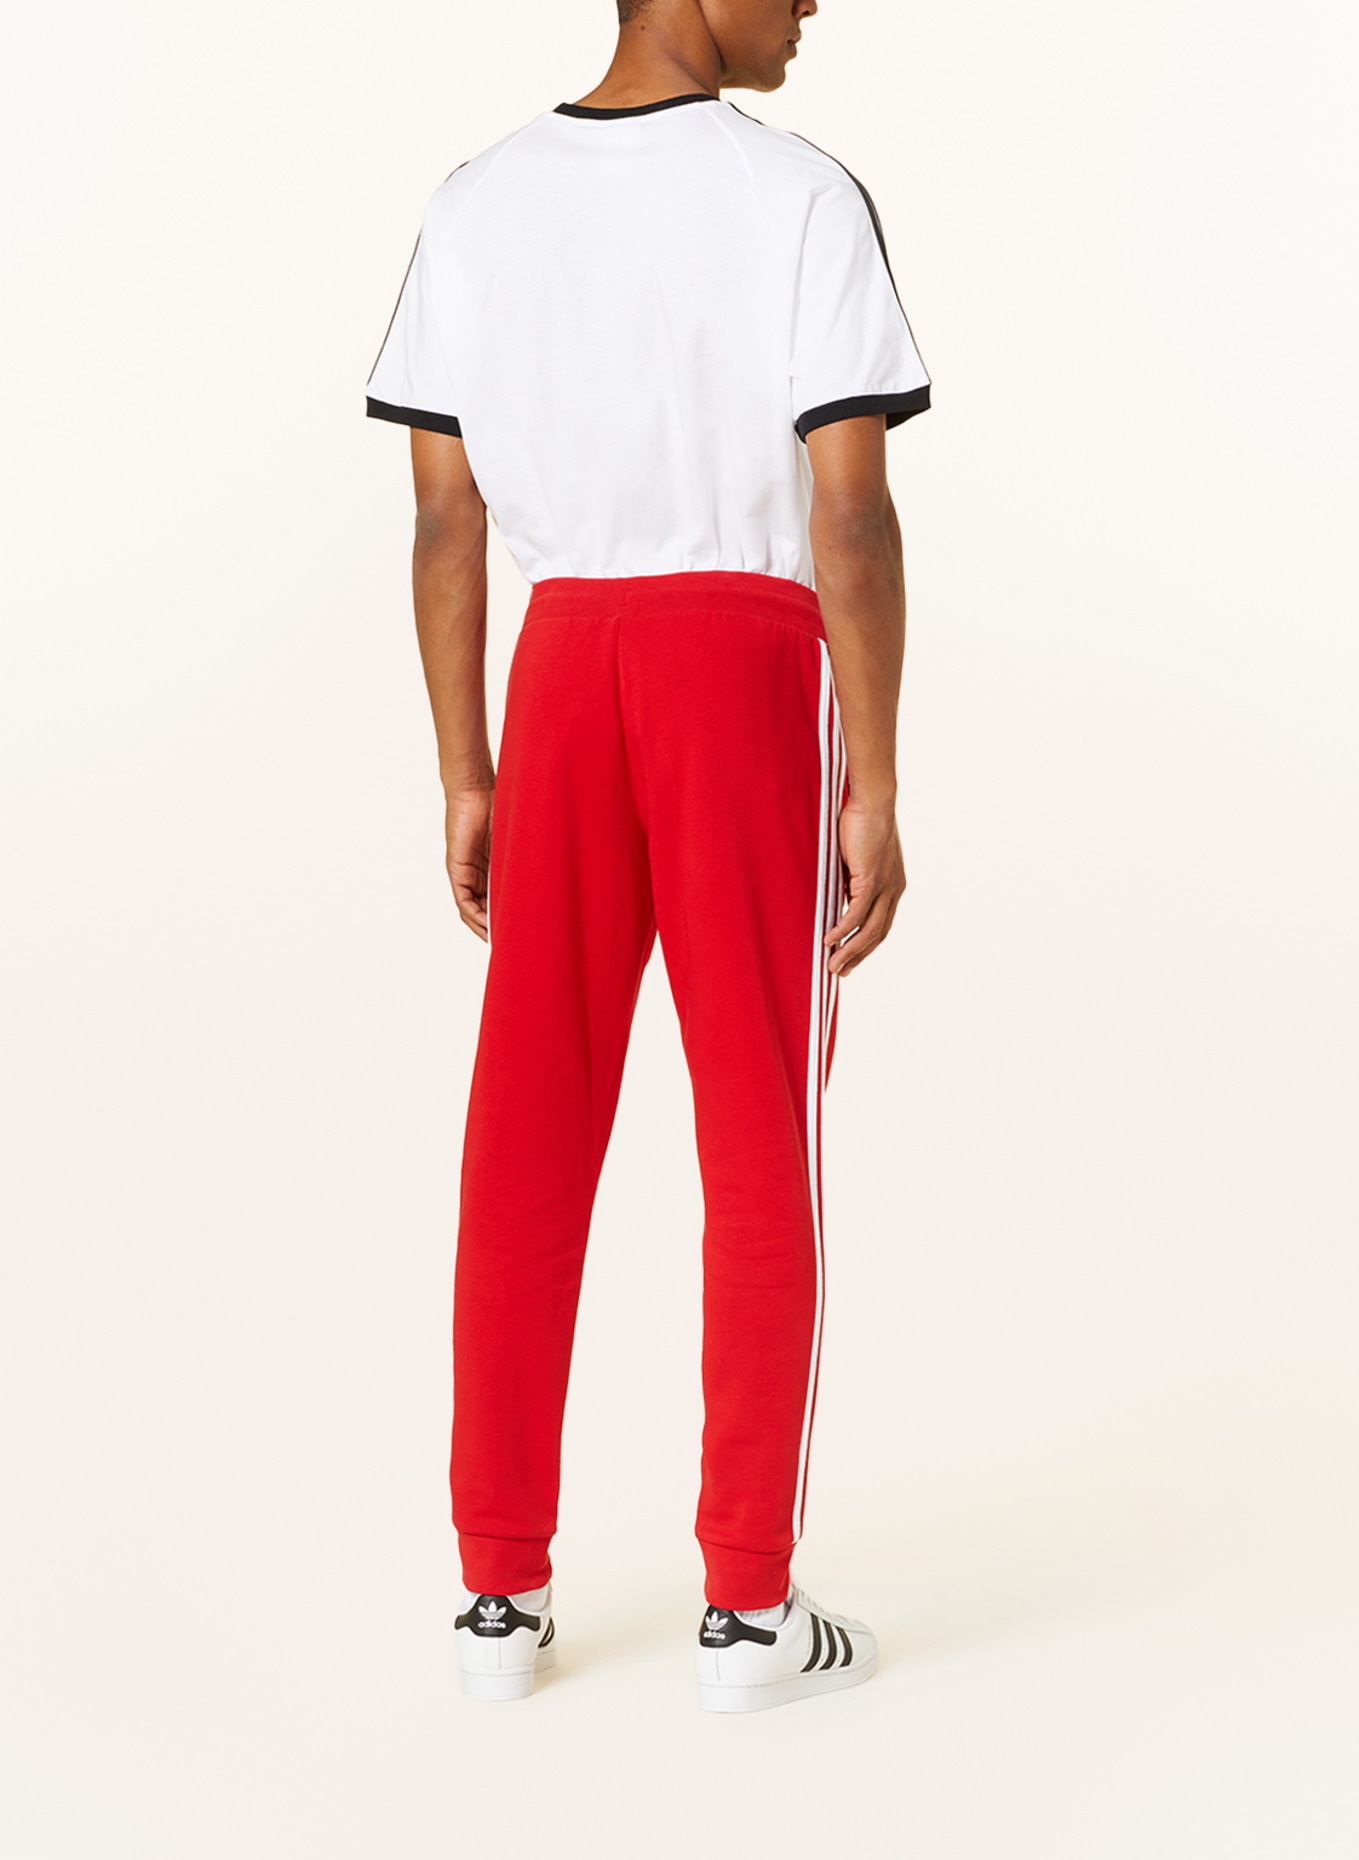 adidas Originals Womens 3 Stripe Pants - Red | Life Style Sports EU